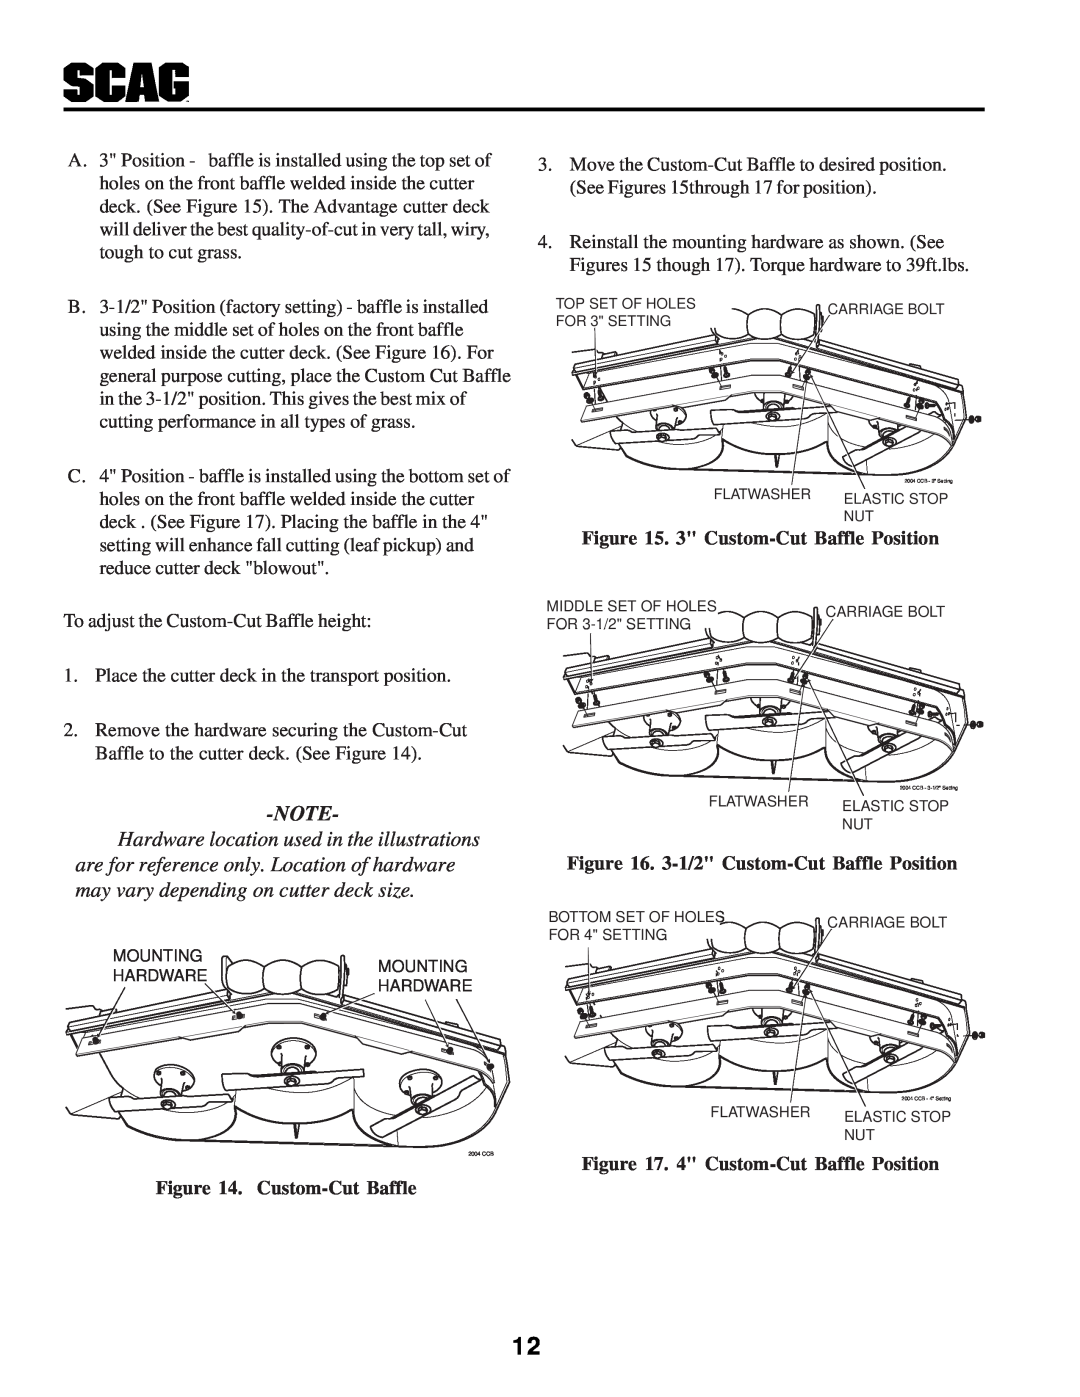 Scag Power Equipment STHM manual 3-1/2 Custom-CutBaffle Position, 4 Custom-CutBaffle Position 